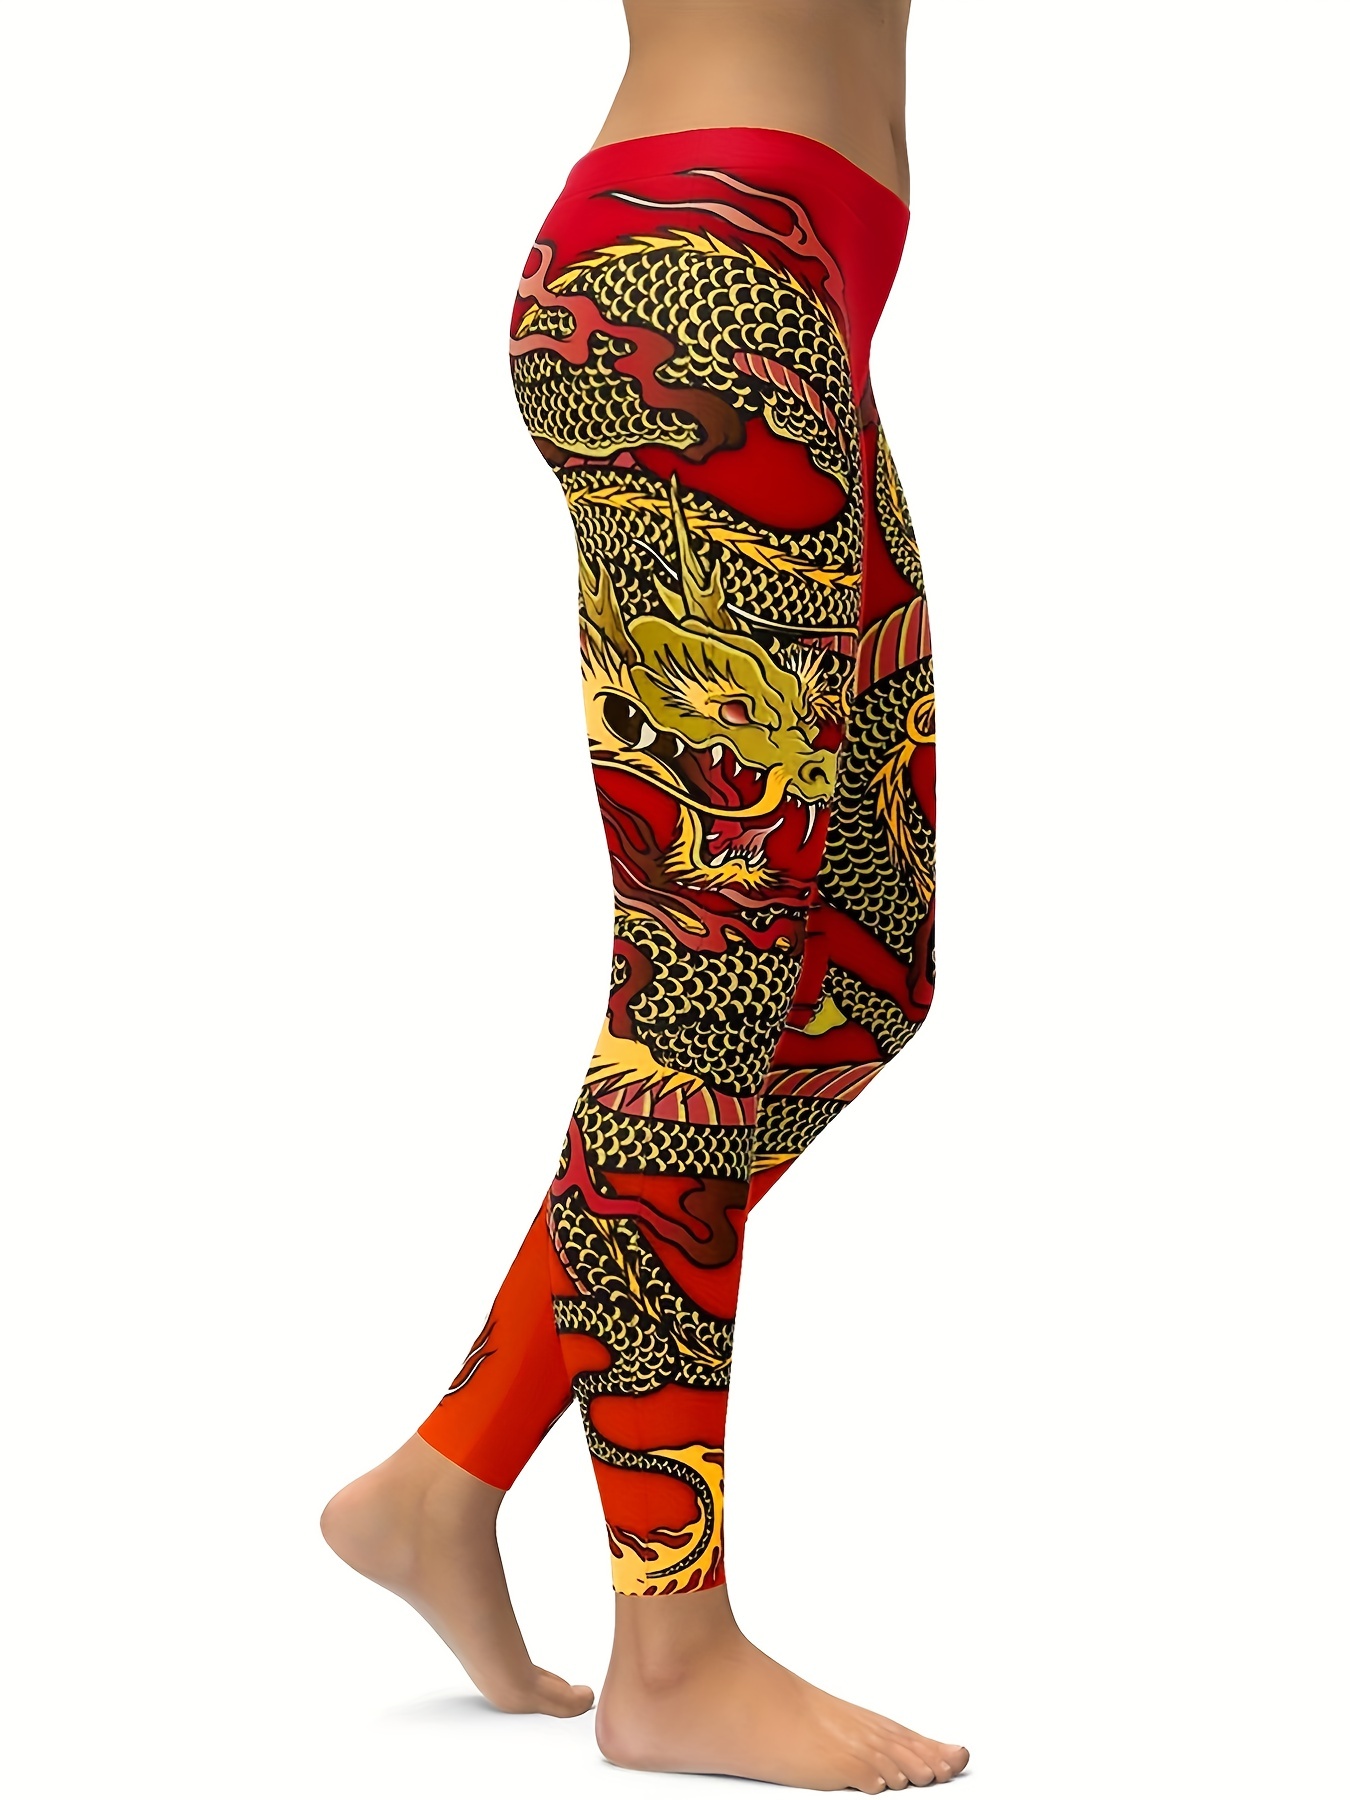 New Women Gold Printed High Waist Fitness Yoga Pants Sport